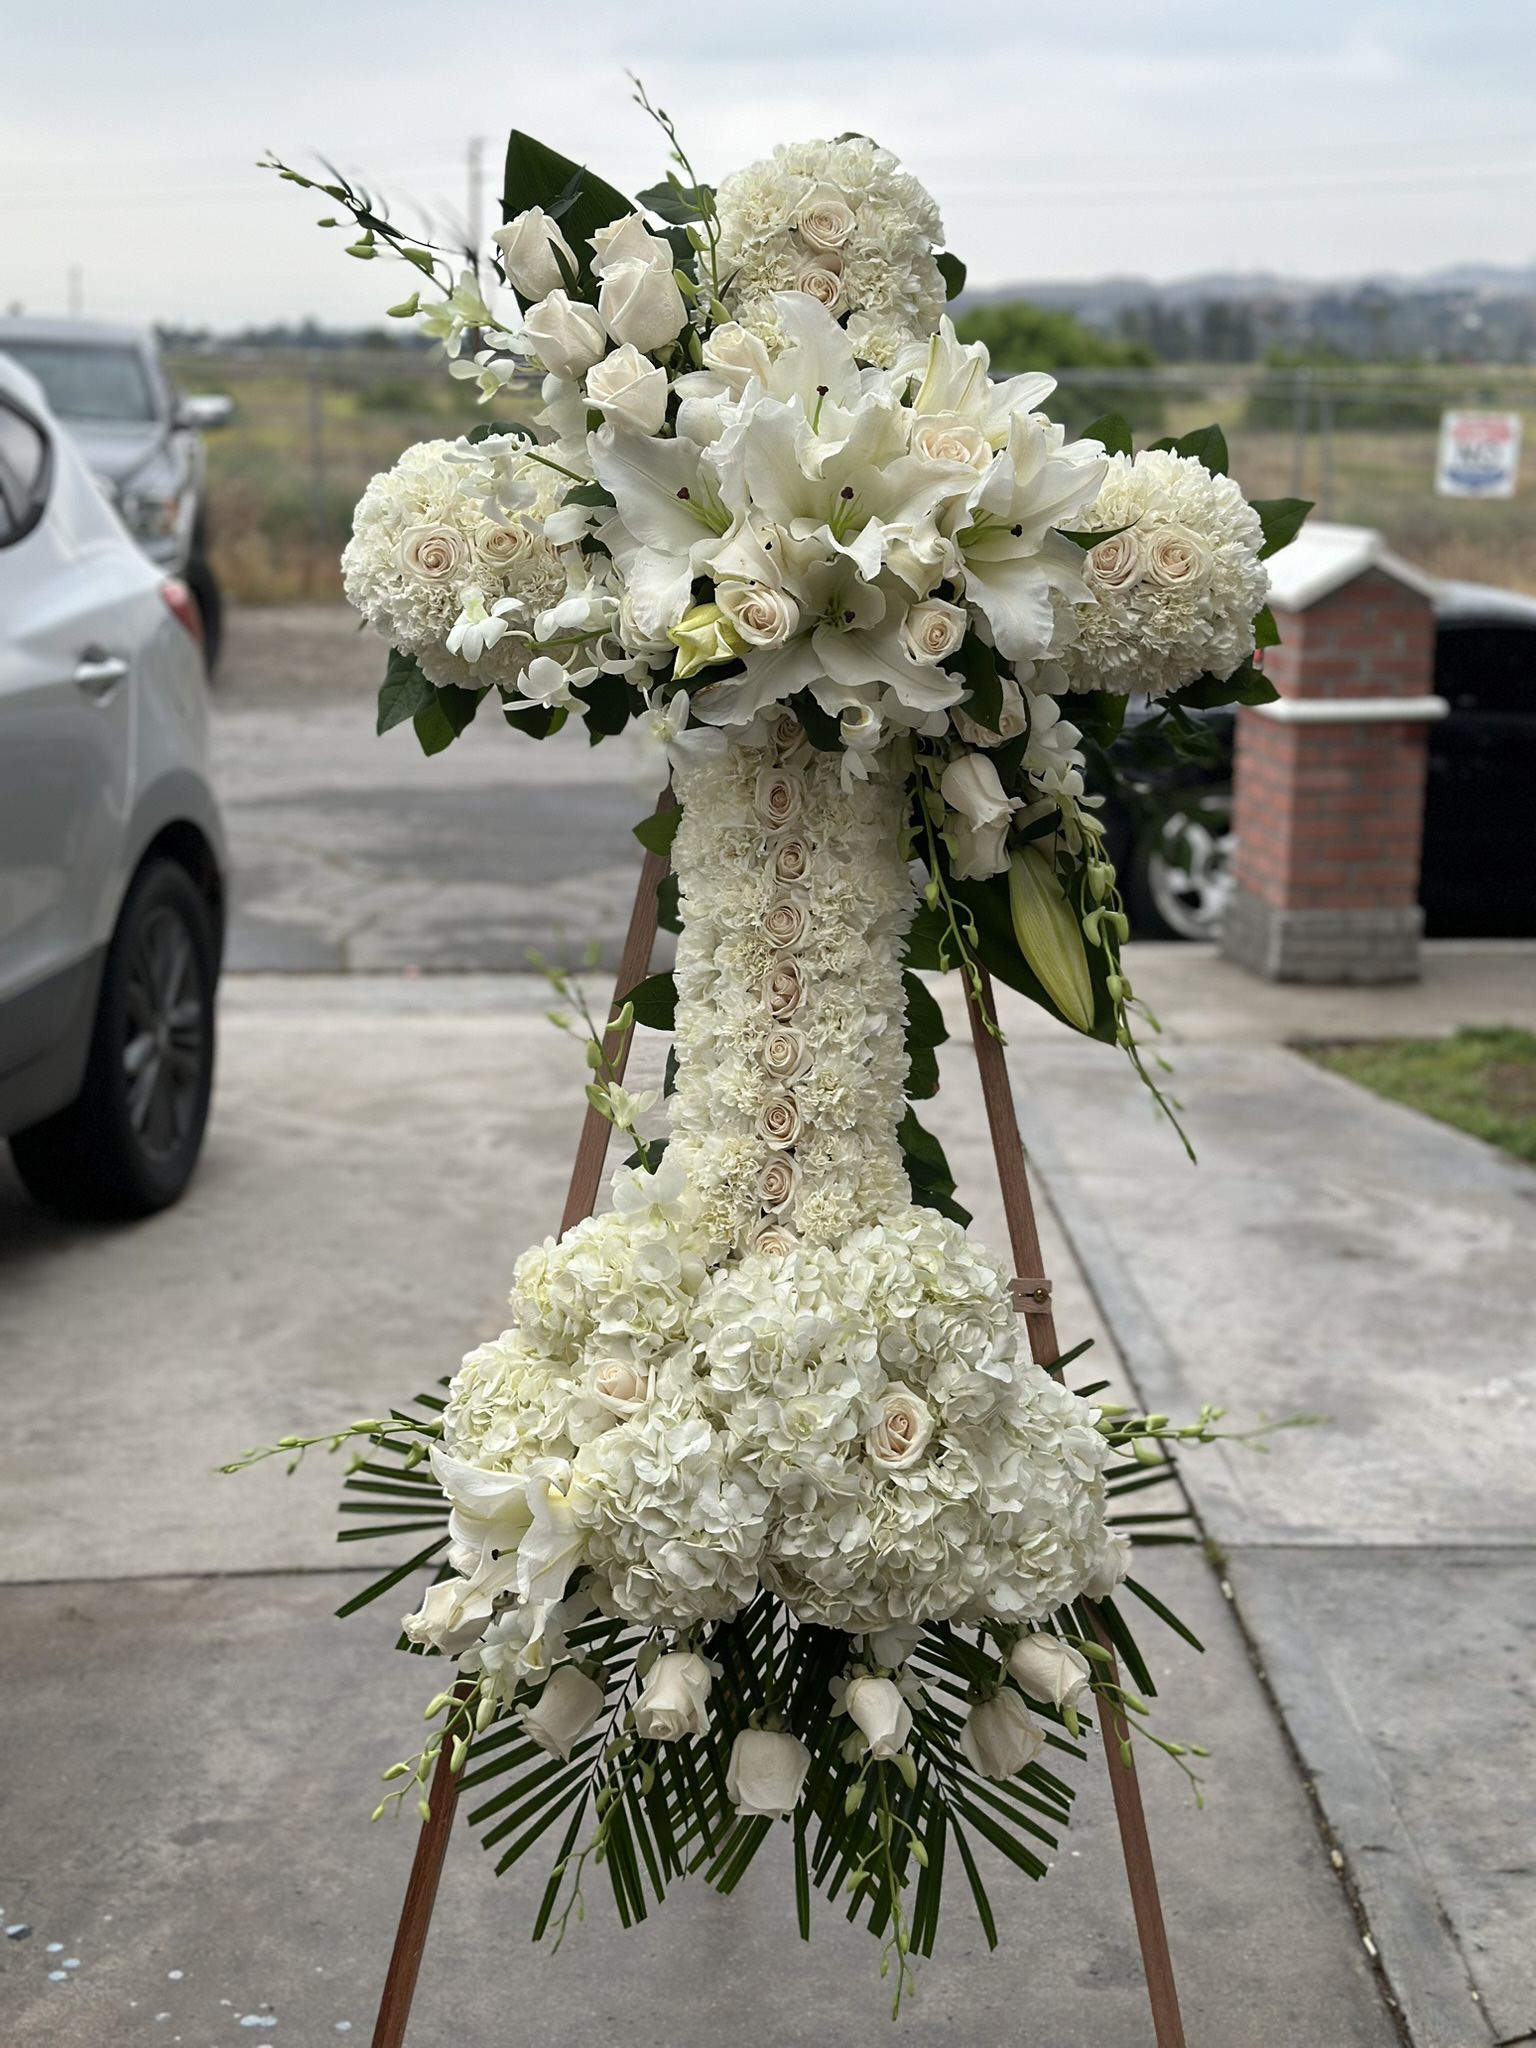 Funeral Flowers Arrangements 